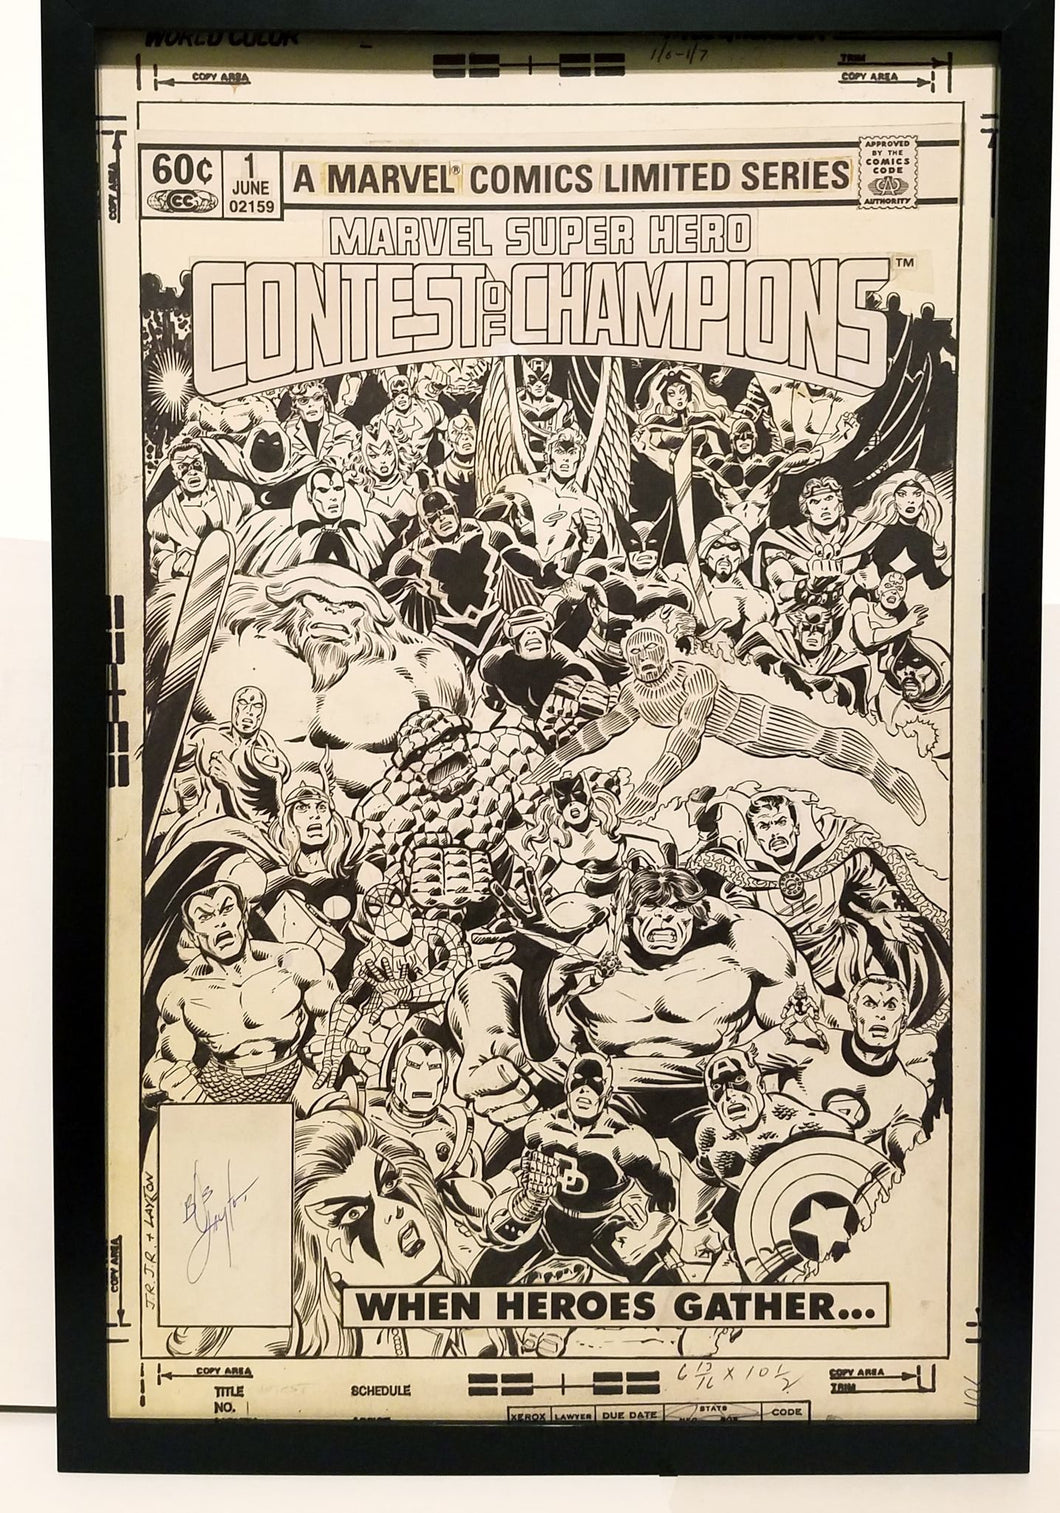 Contest of Champions #1 by John Romita Jr 11x17 FRAMED Original Art Poster Marvel Comics